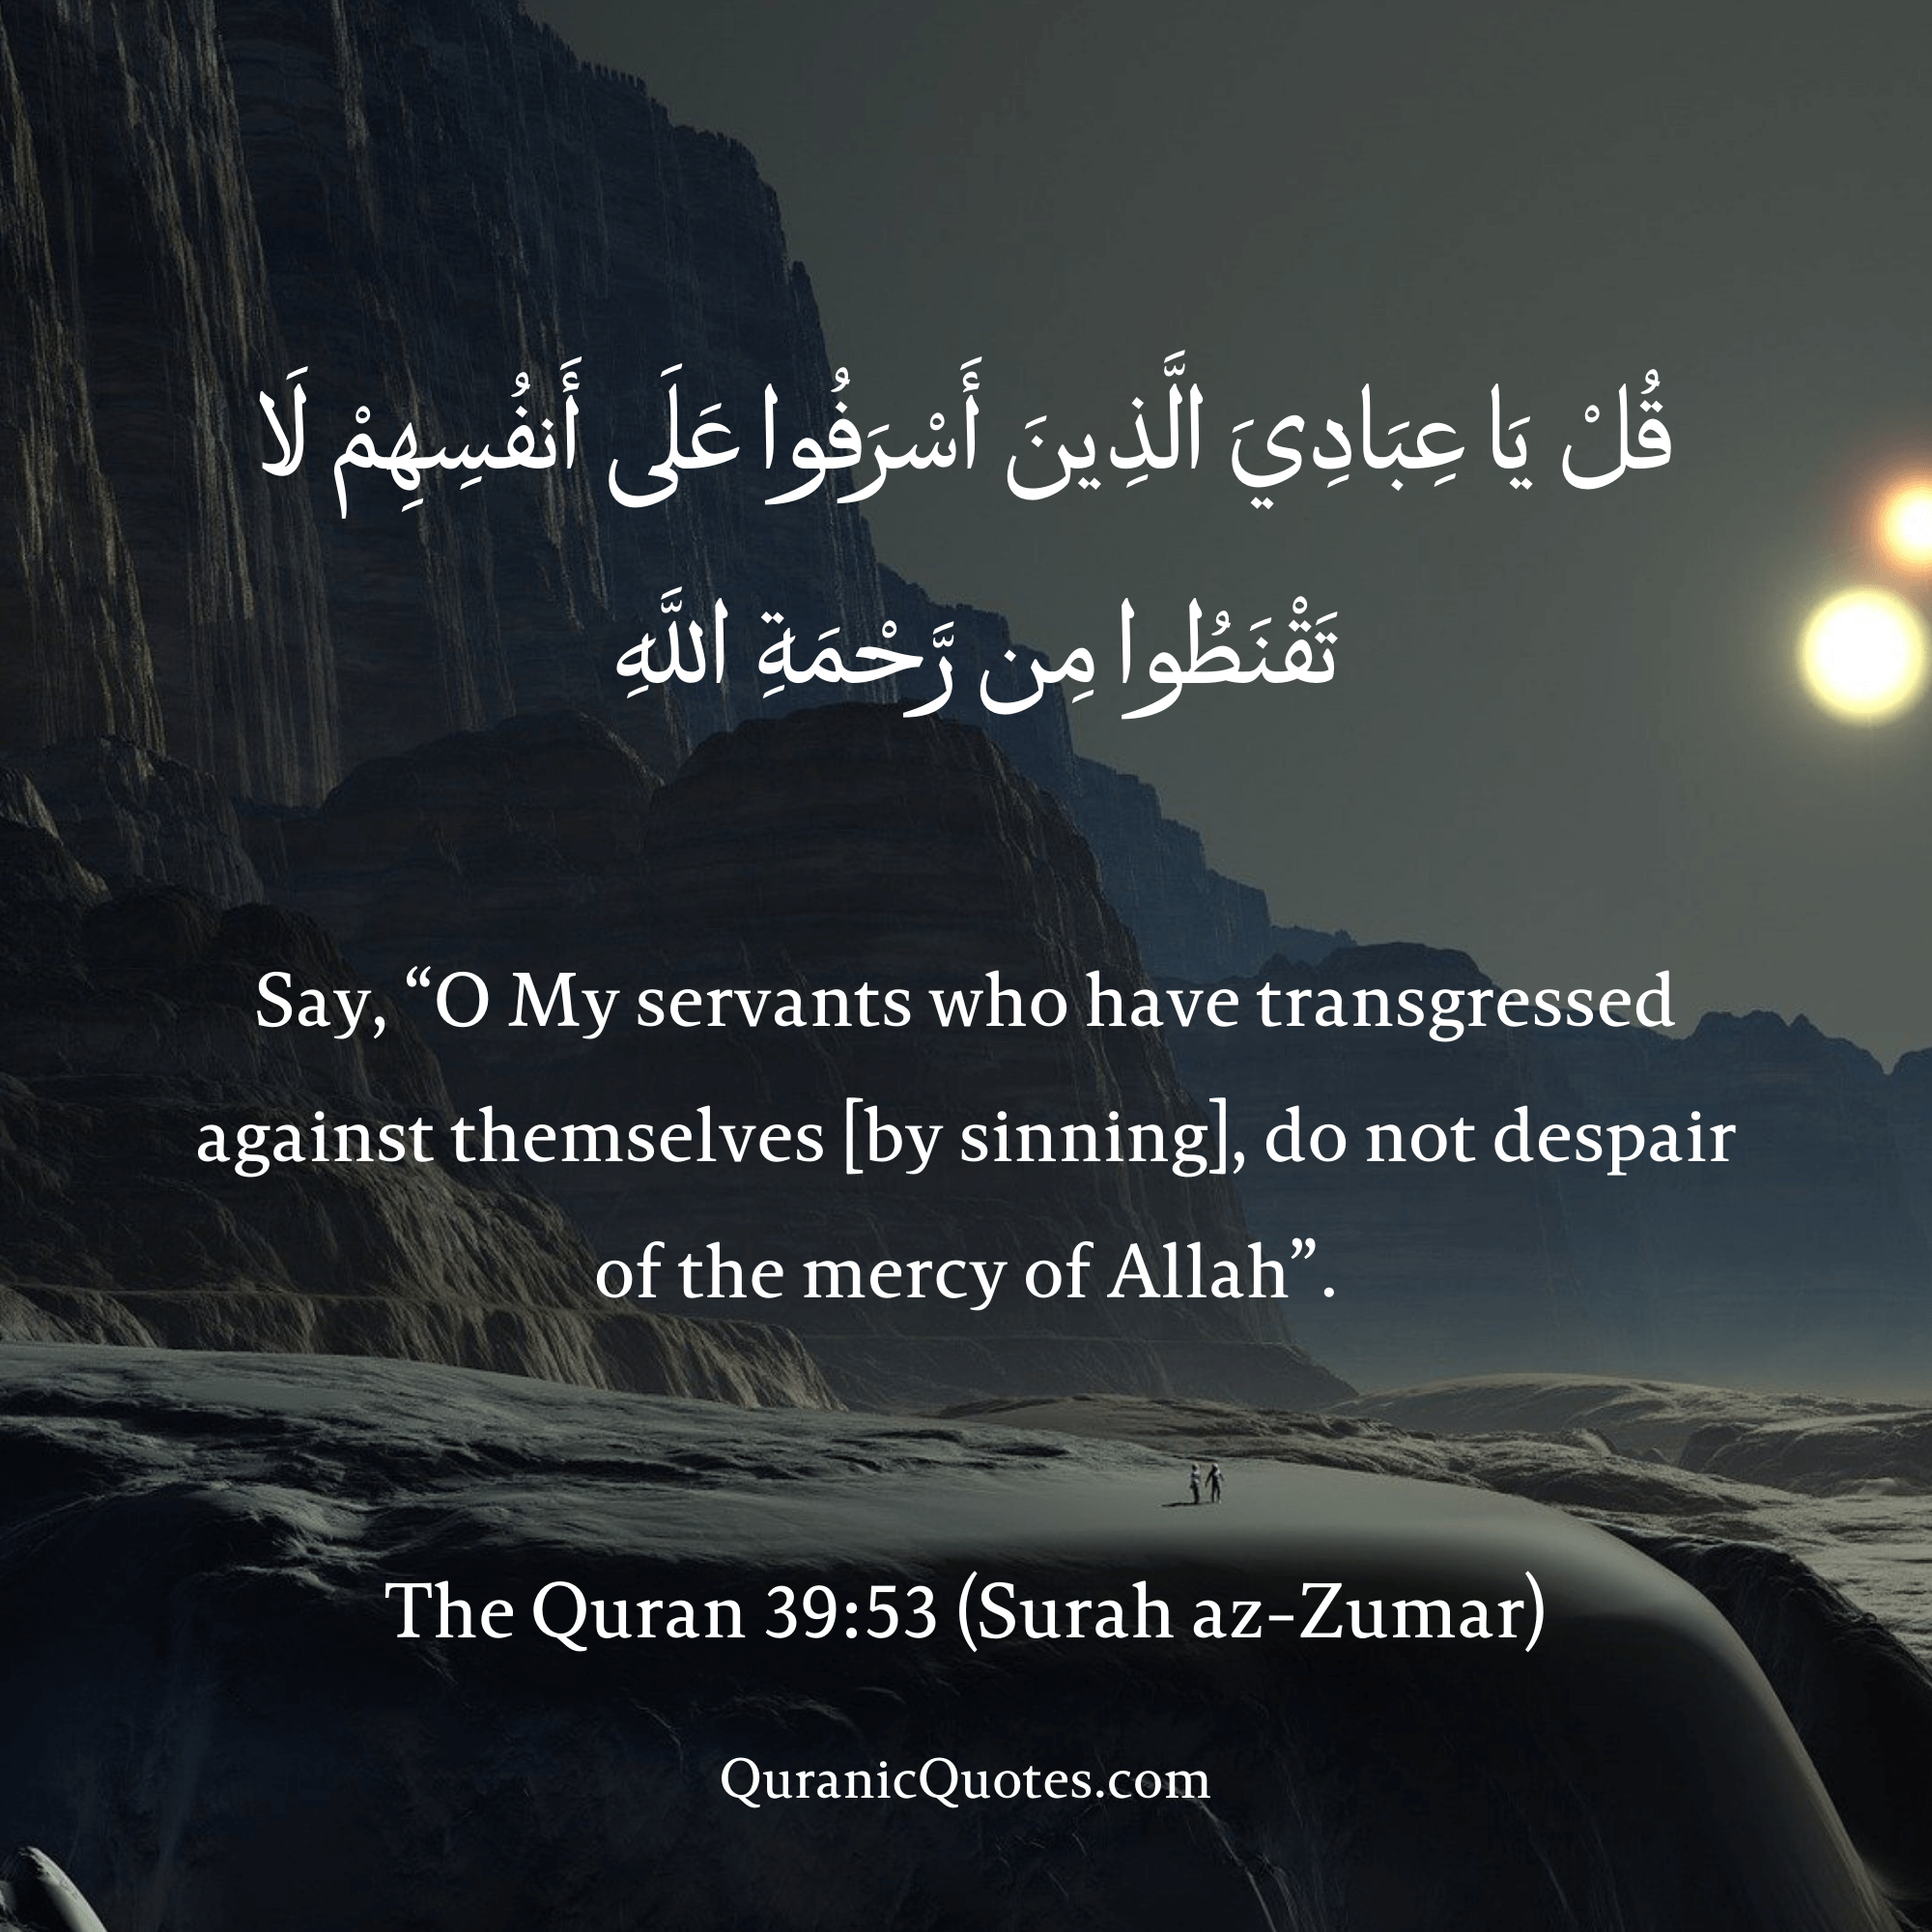 Quranic Quotes in English 570